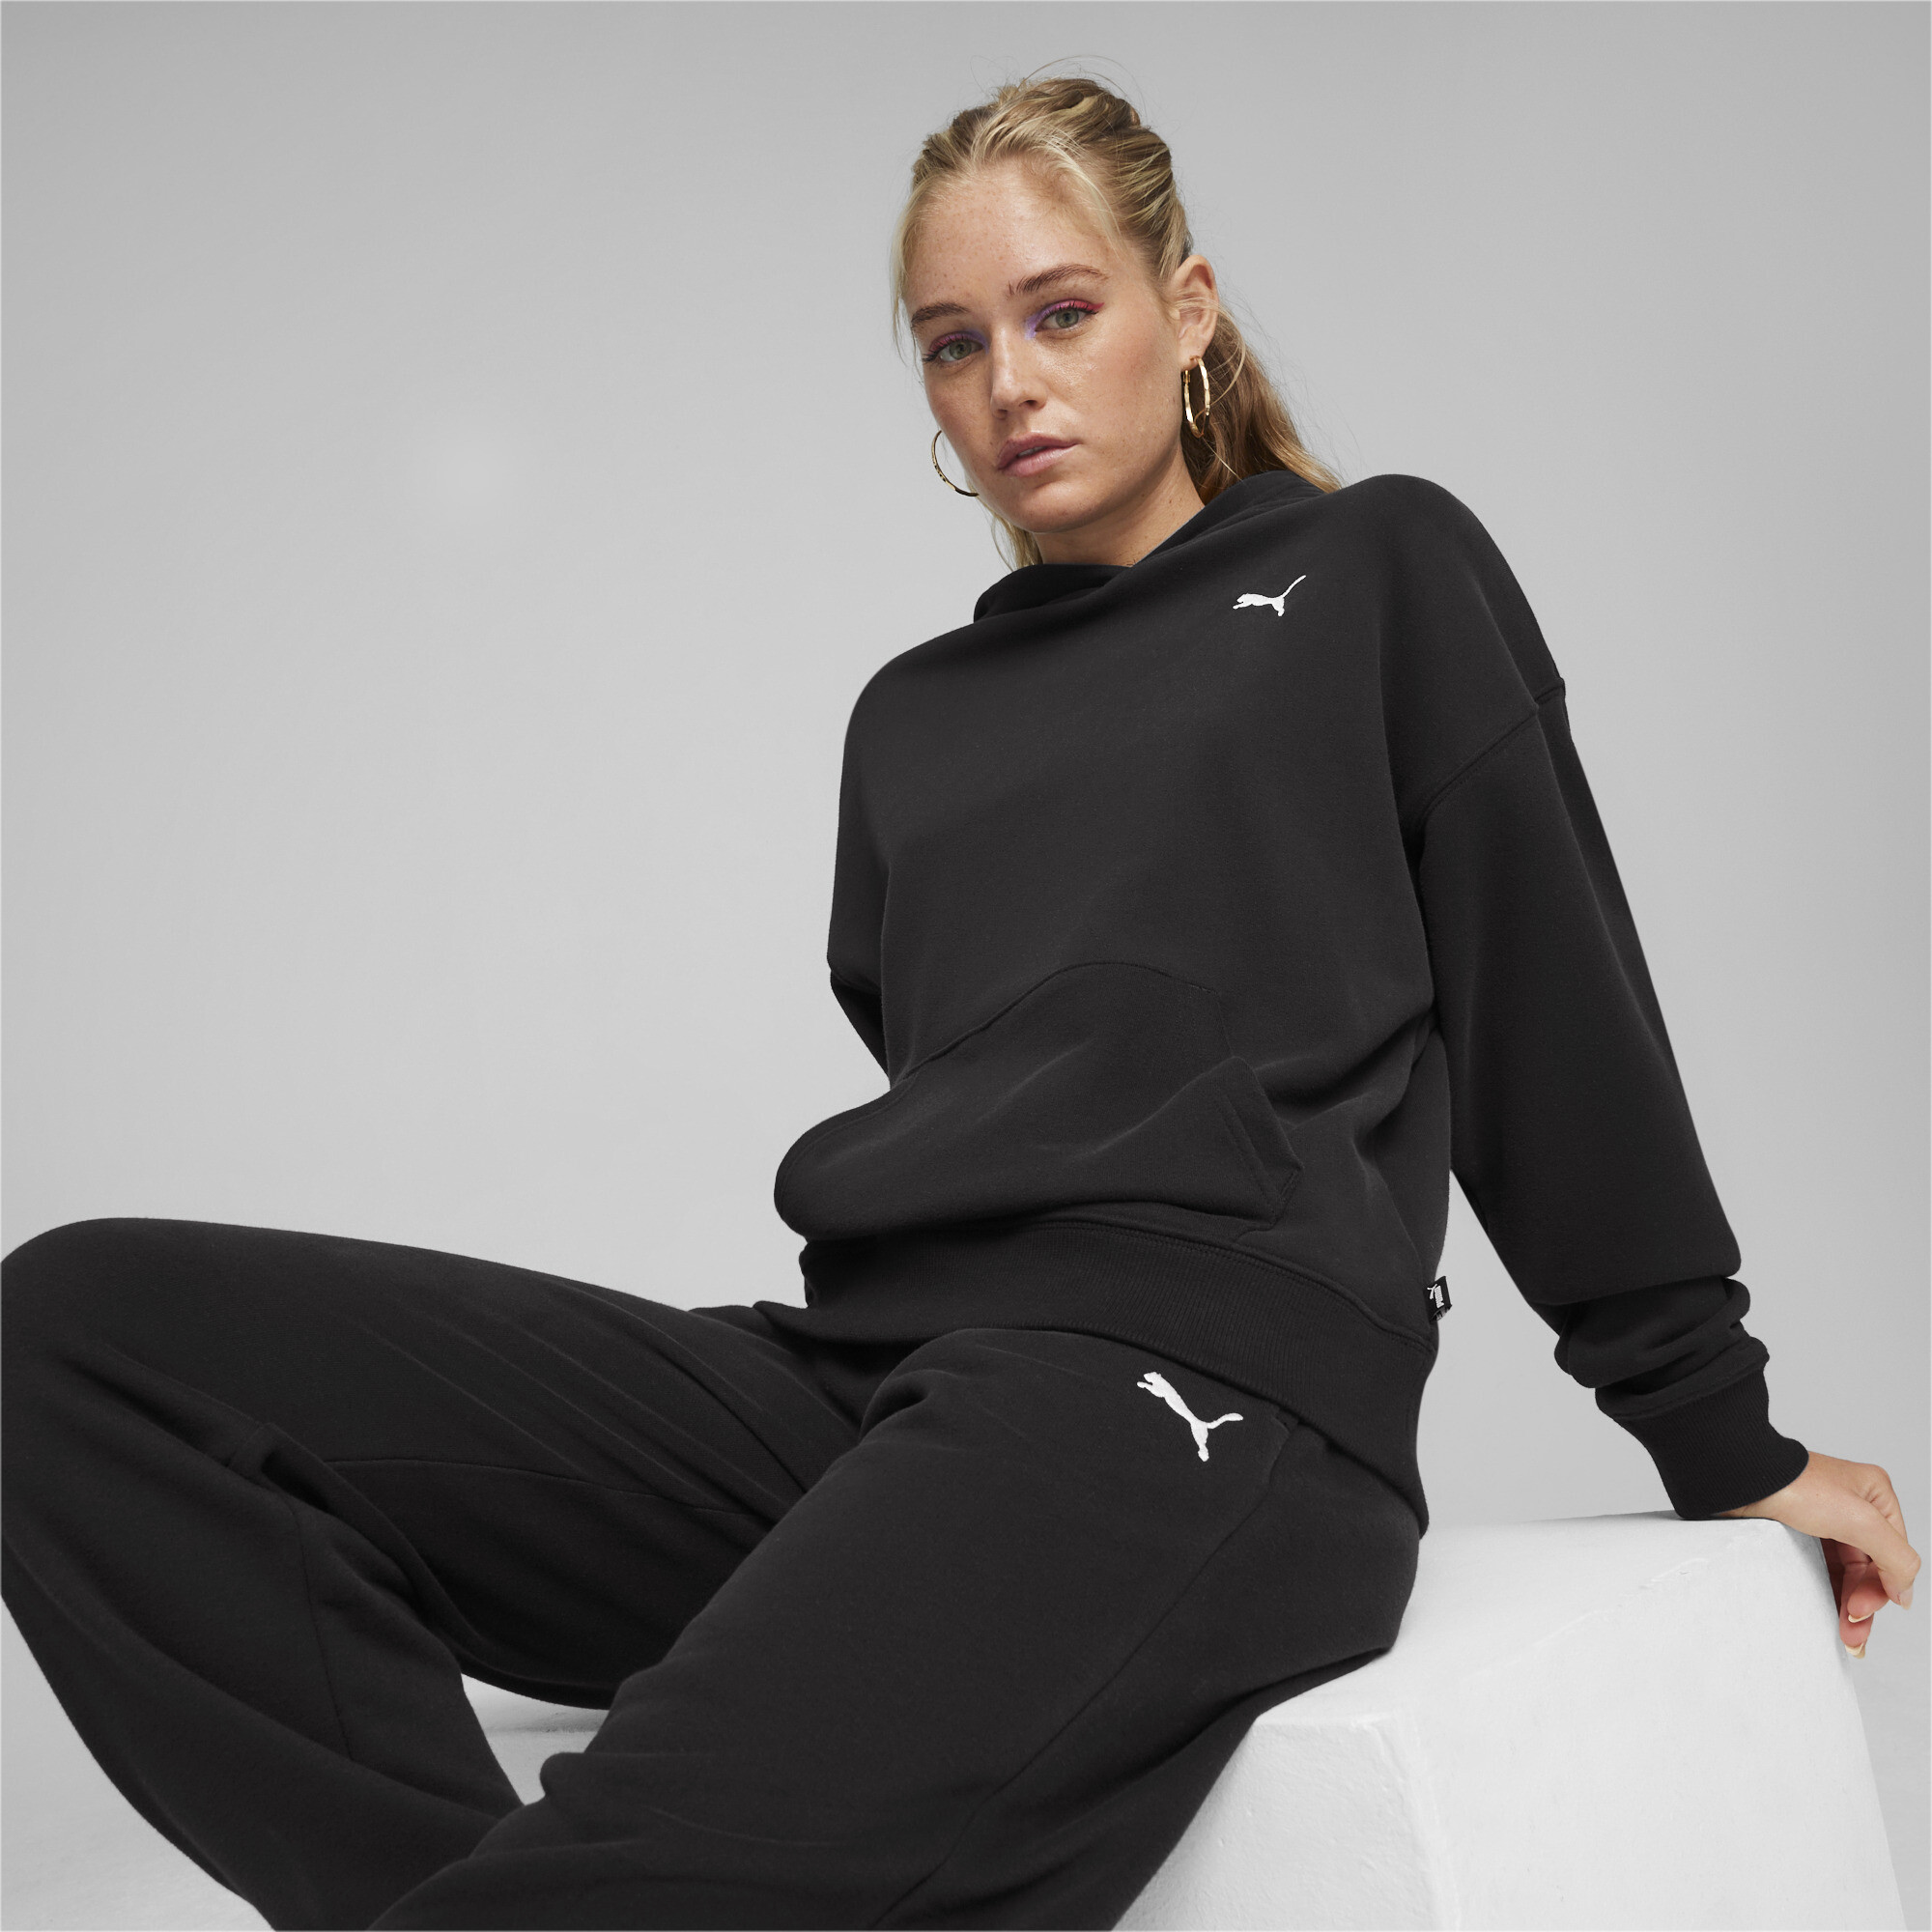 Women's Puma Loungewear's Track Suit, Black, Size M, Clothing